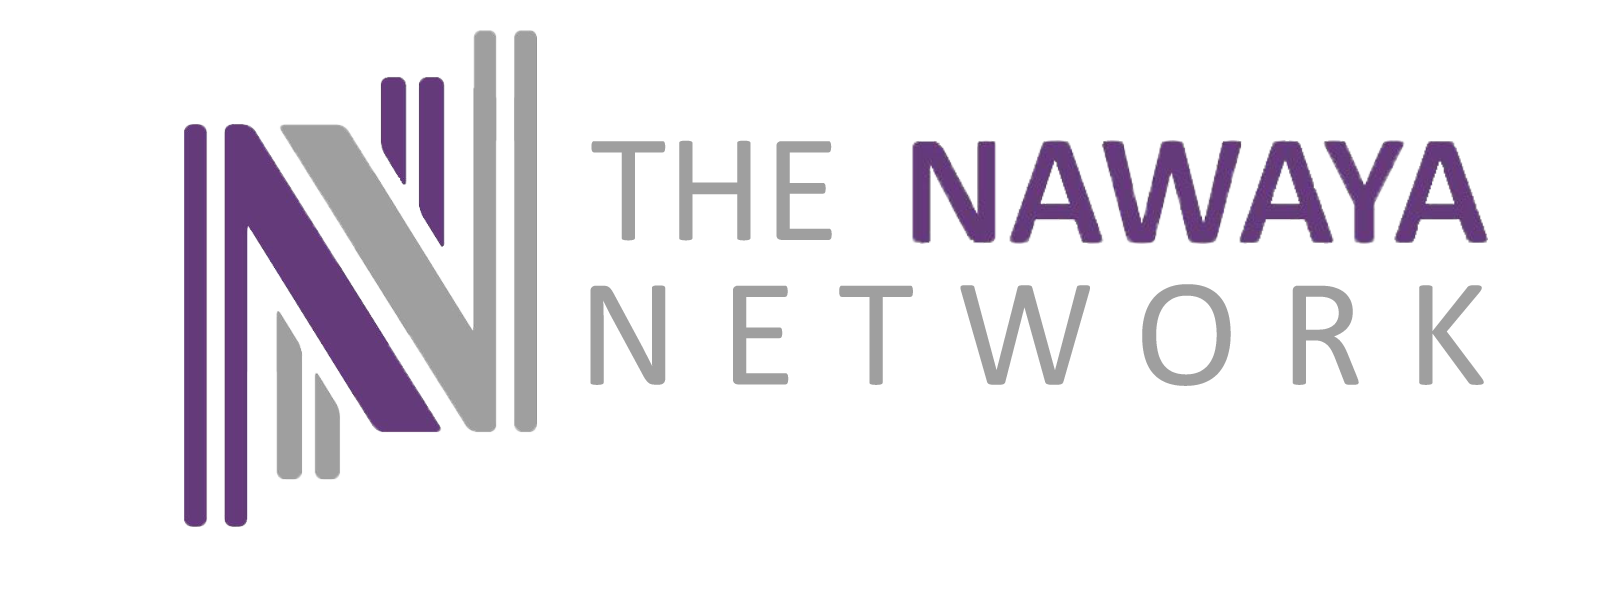 main-logo The Nawaya Network